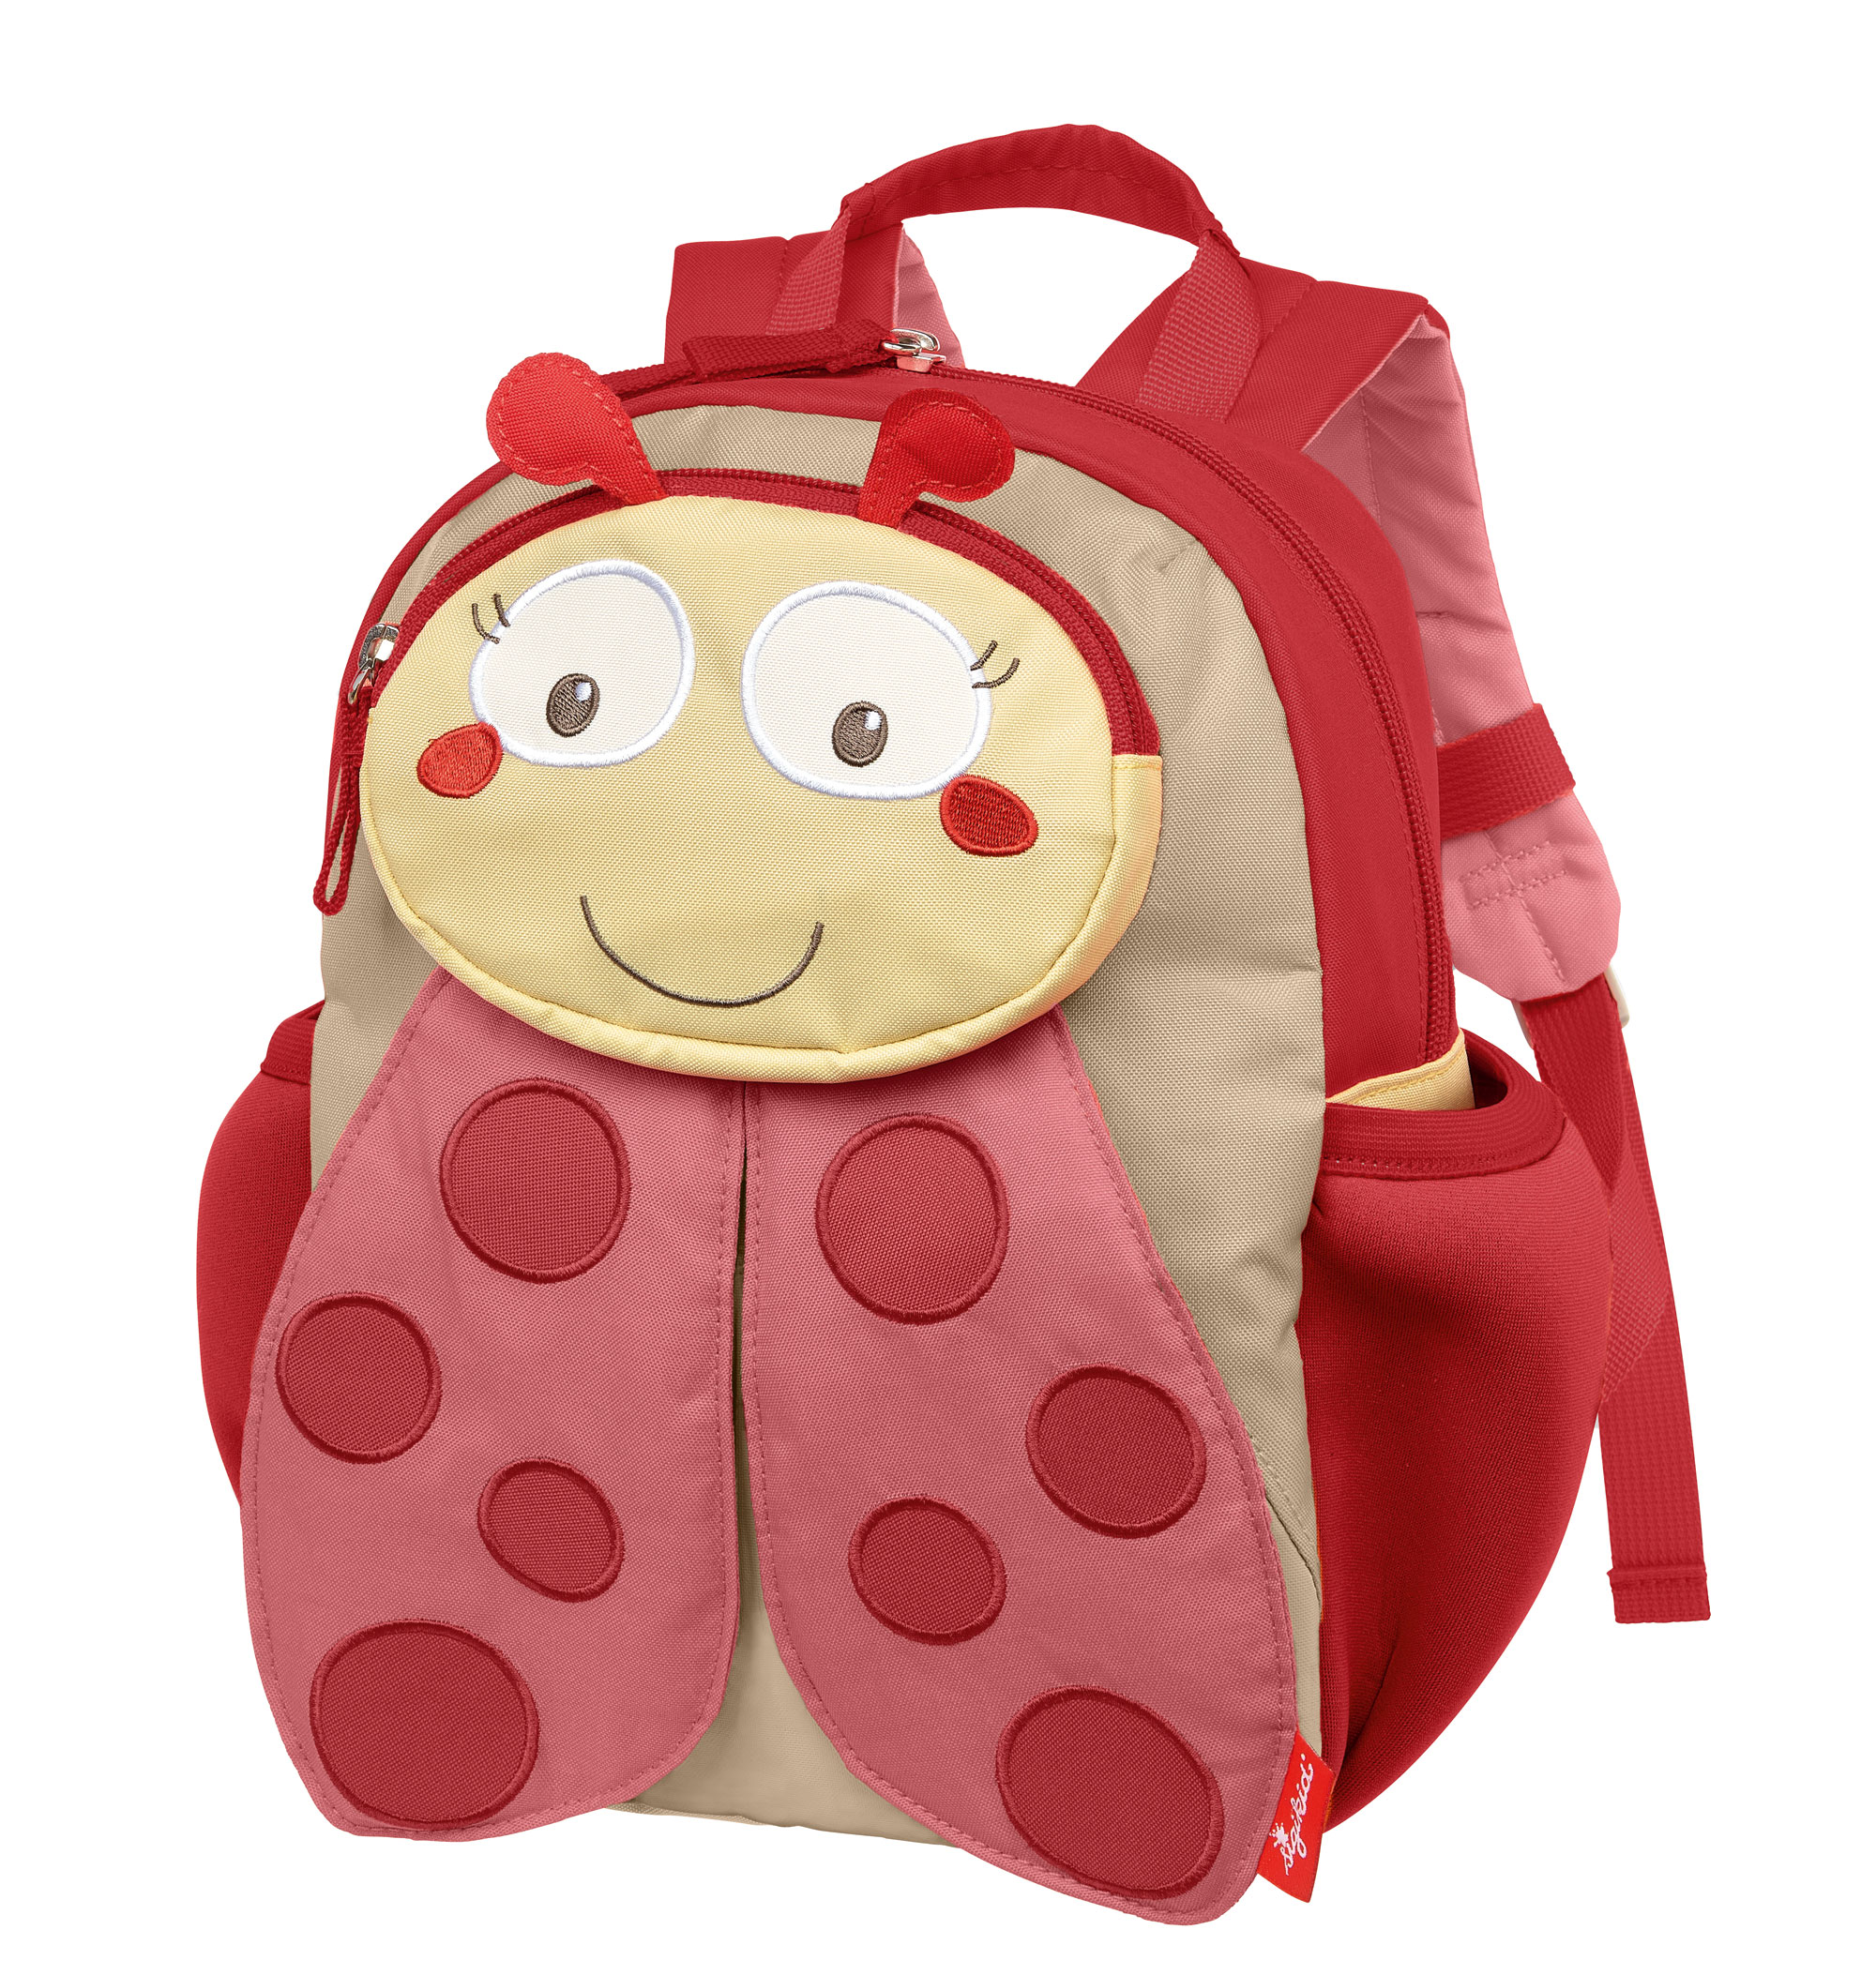 Children's backpack lady bird